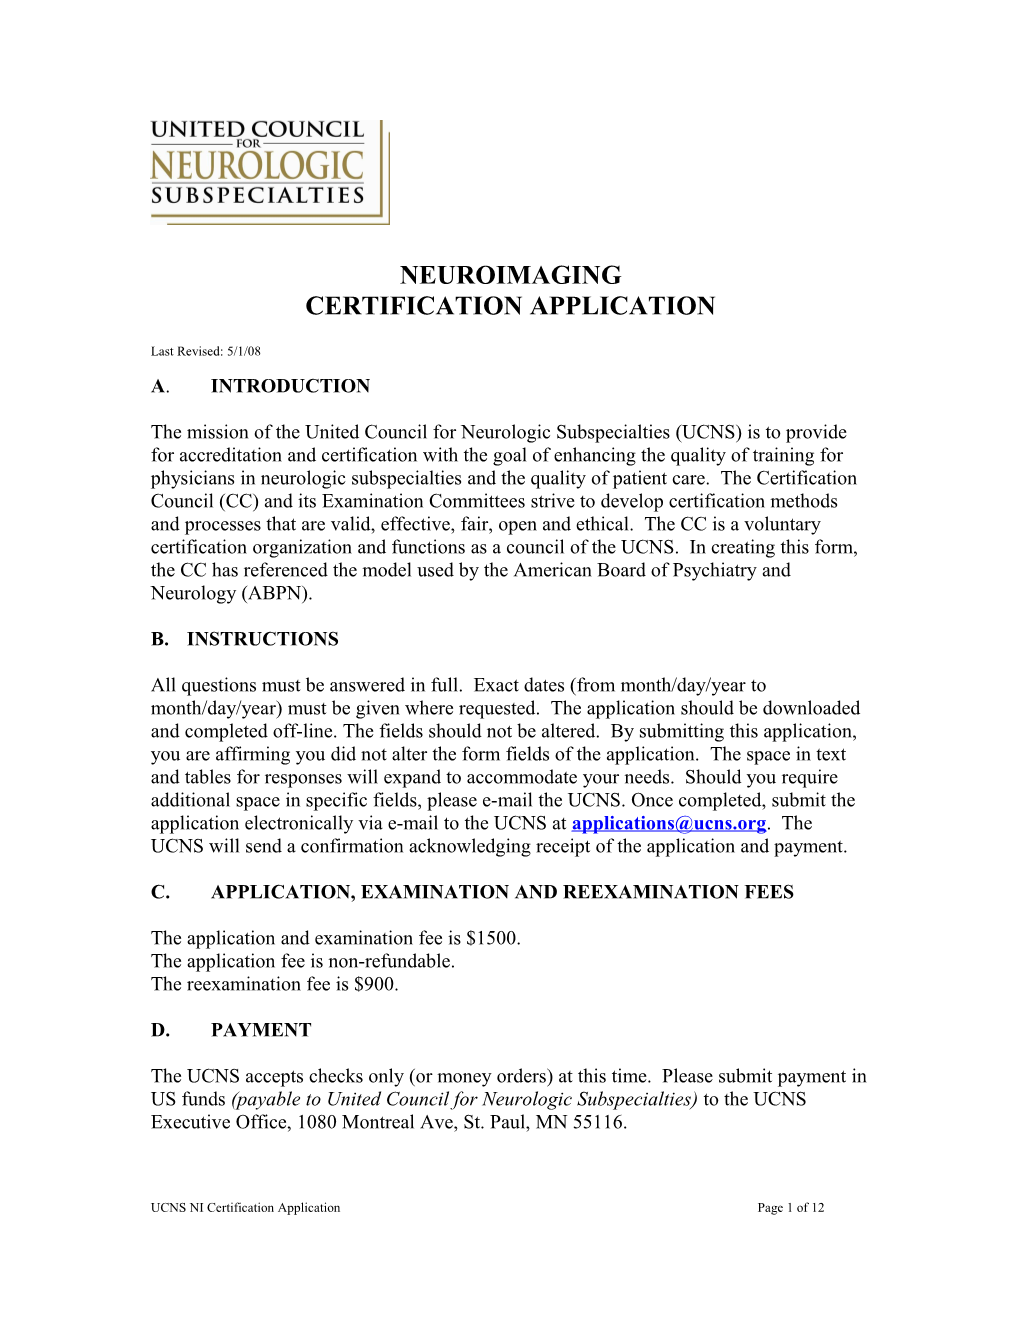 Certification Application